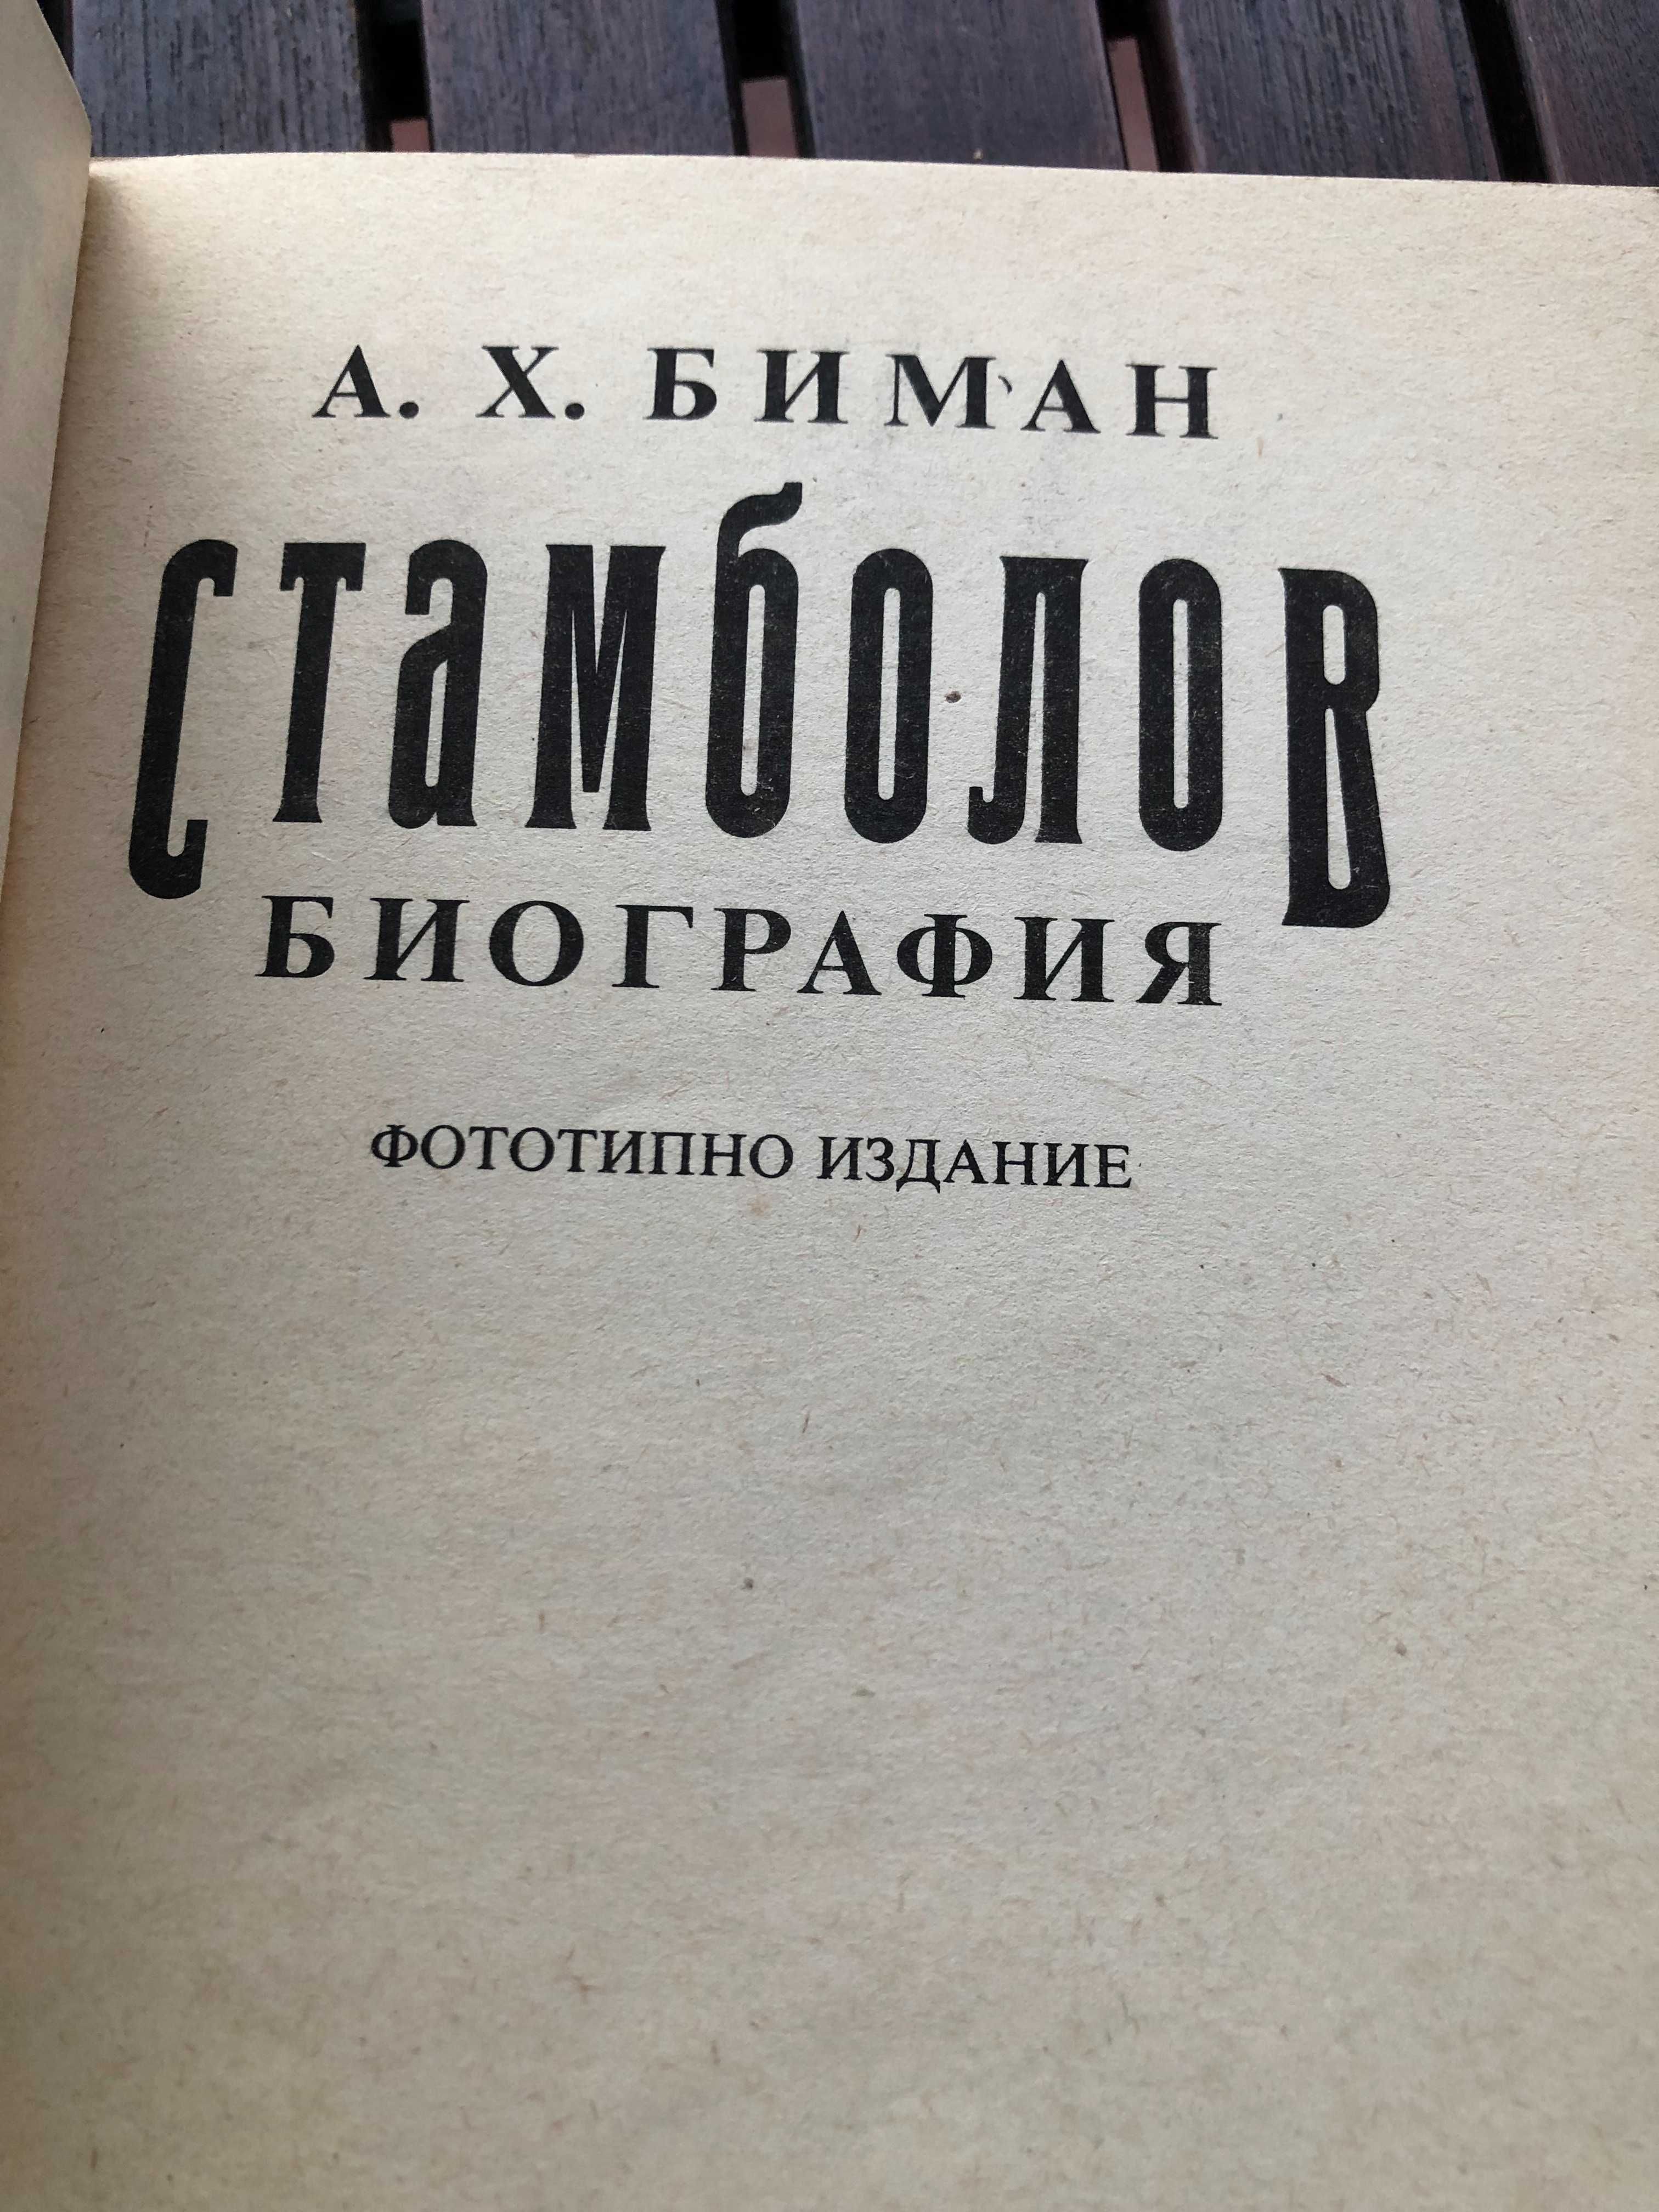 Стамболов - биография, от А.Х.Биман - фототипно издание